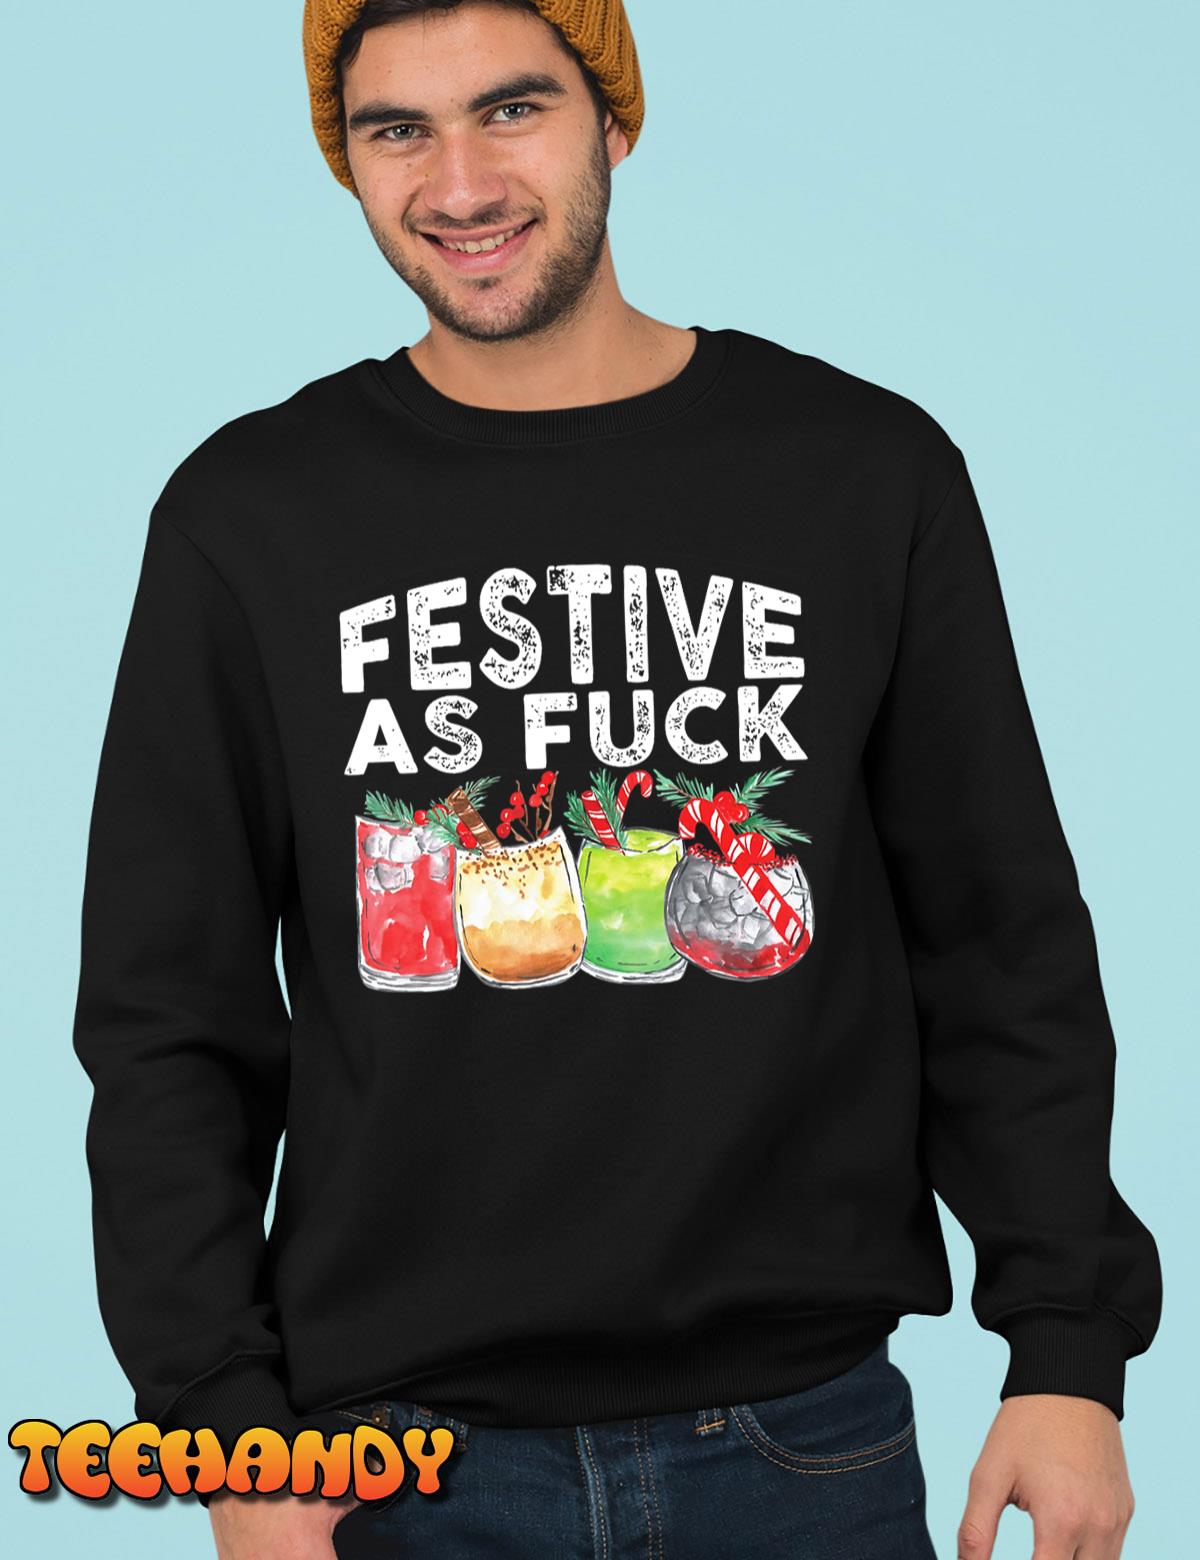 Festive As Fuck Funny Ugly Christmas Holiday T-Shirt